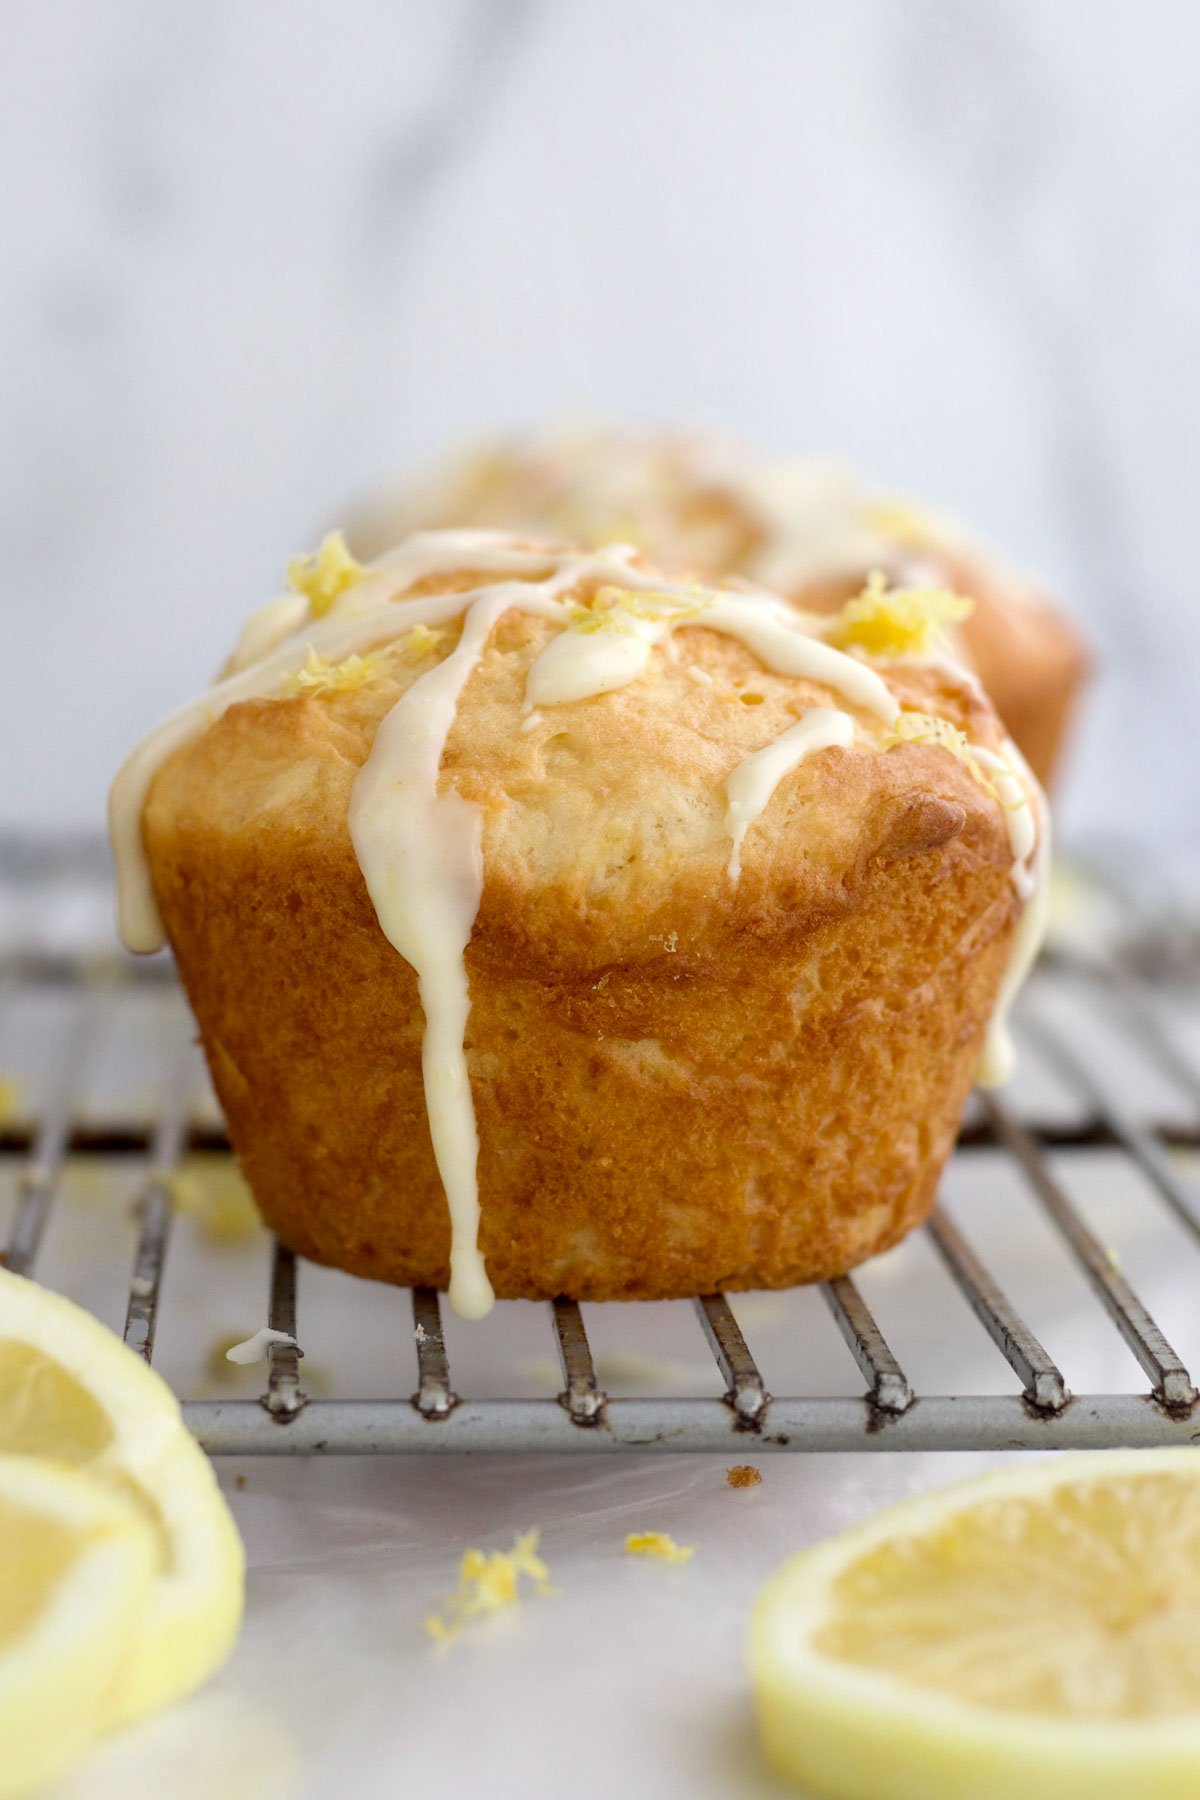 Lemon zest and lemon glaze drizzled atop the Lemon Muffin.